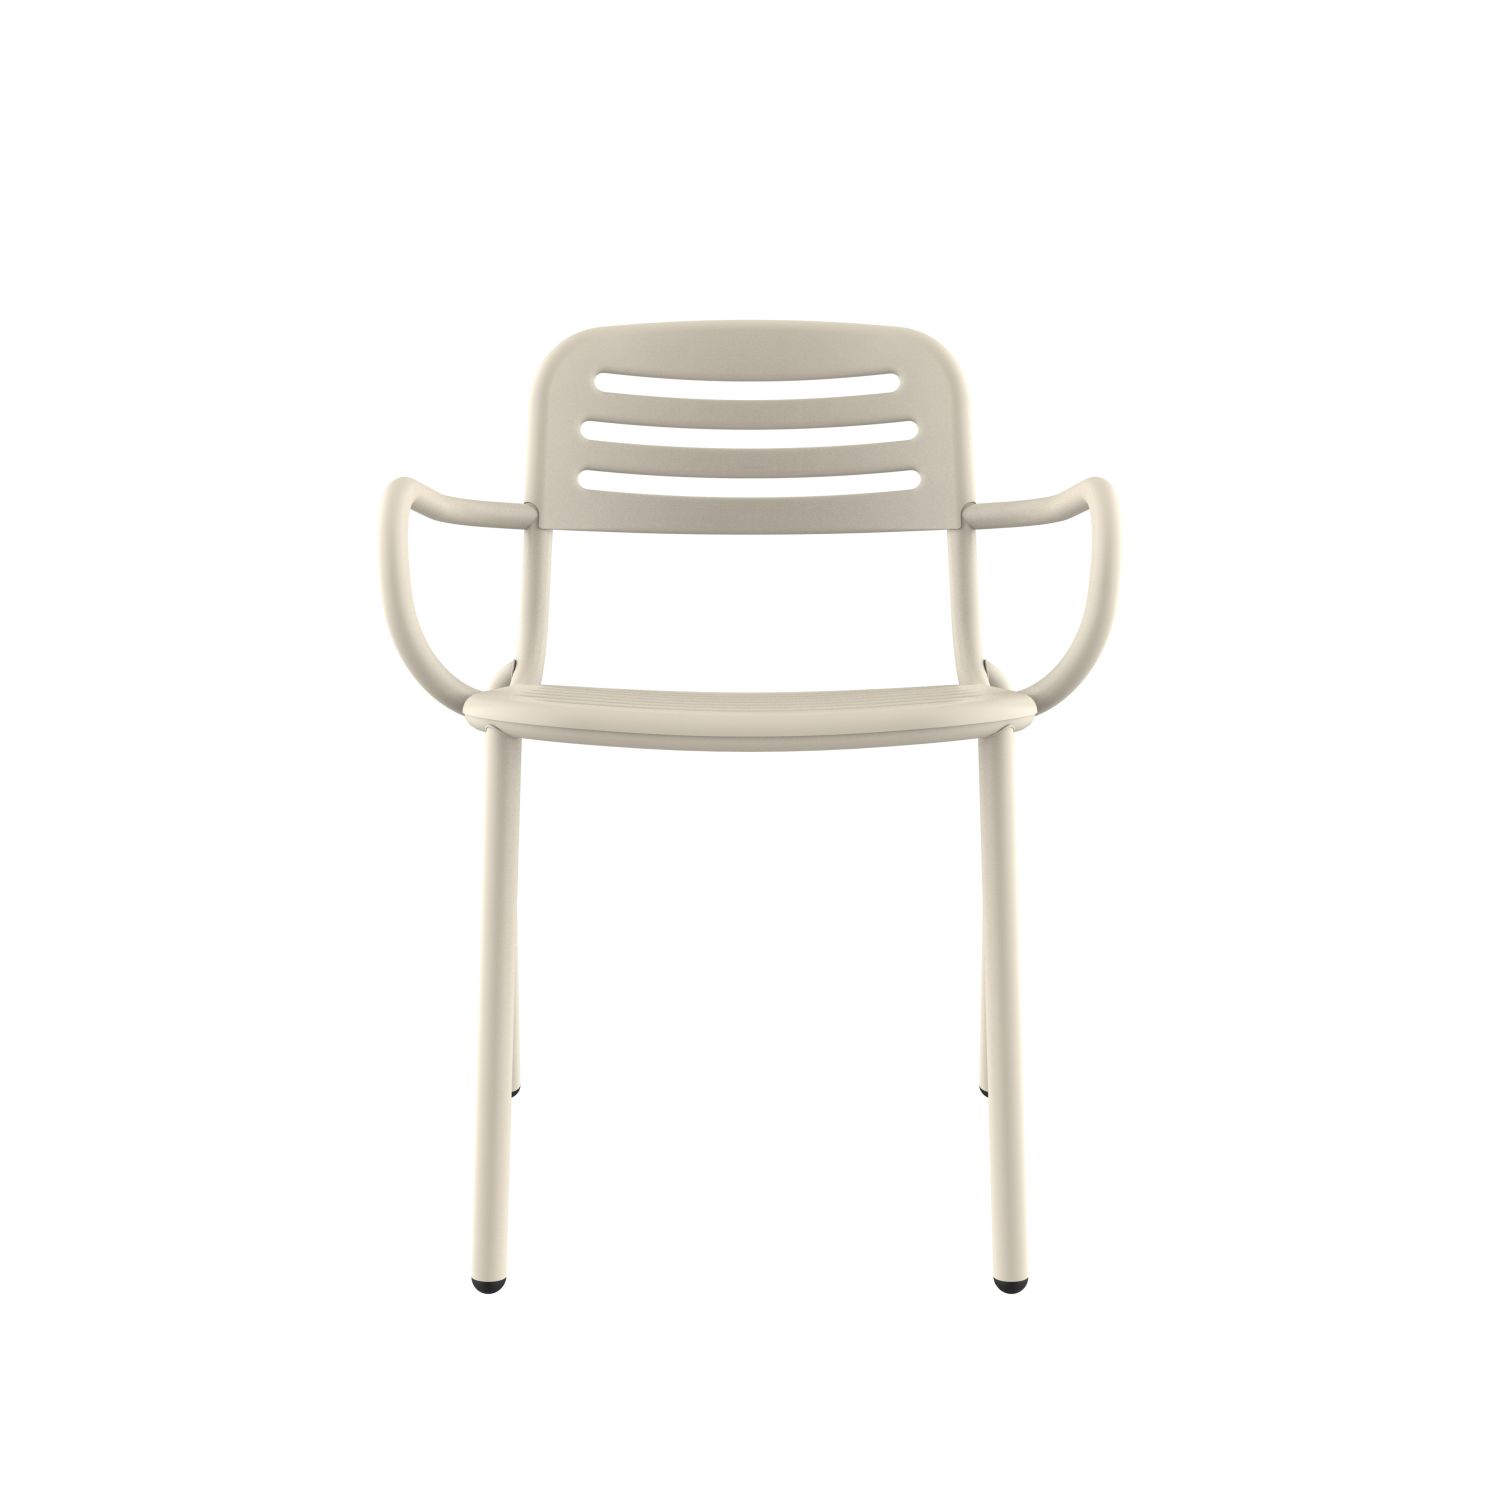 lensvelt studio stefan scholten loop chair stackable no armrests no perforation oyster white ral1013